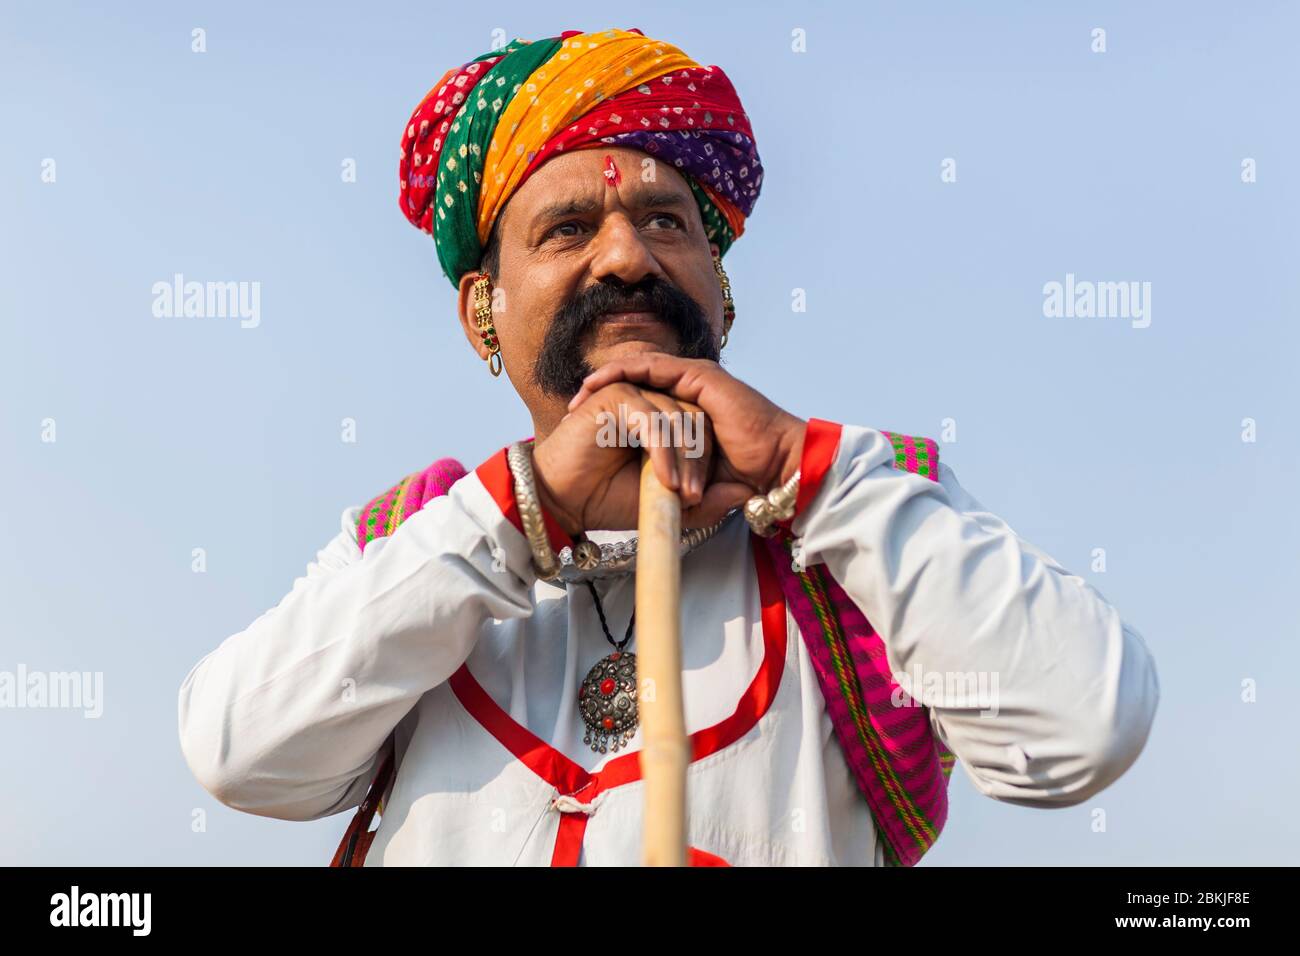 India, Rajasthan, Bikaner, Camel Festival, man wearing traditional clothes Stock Photo